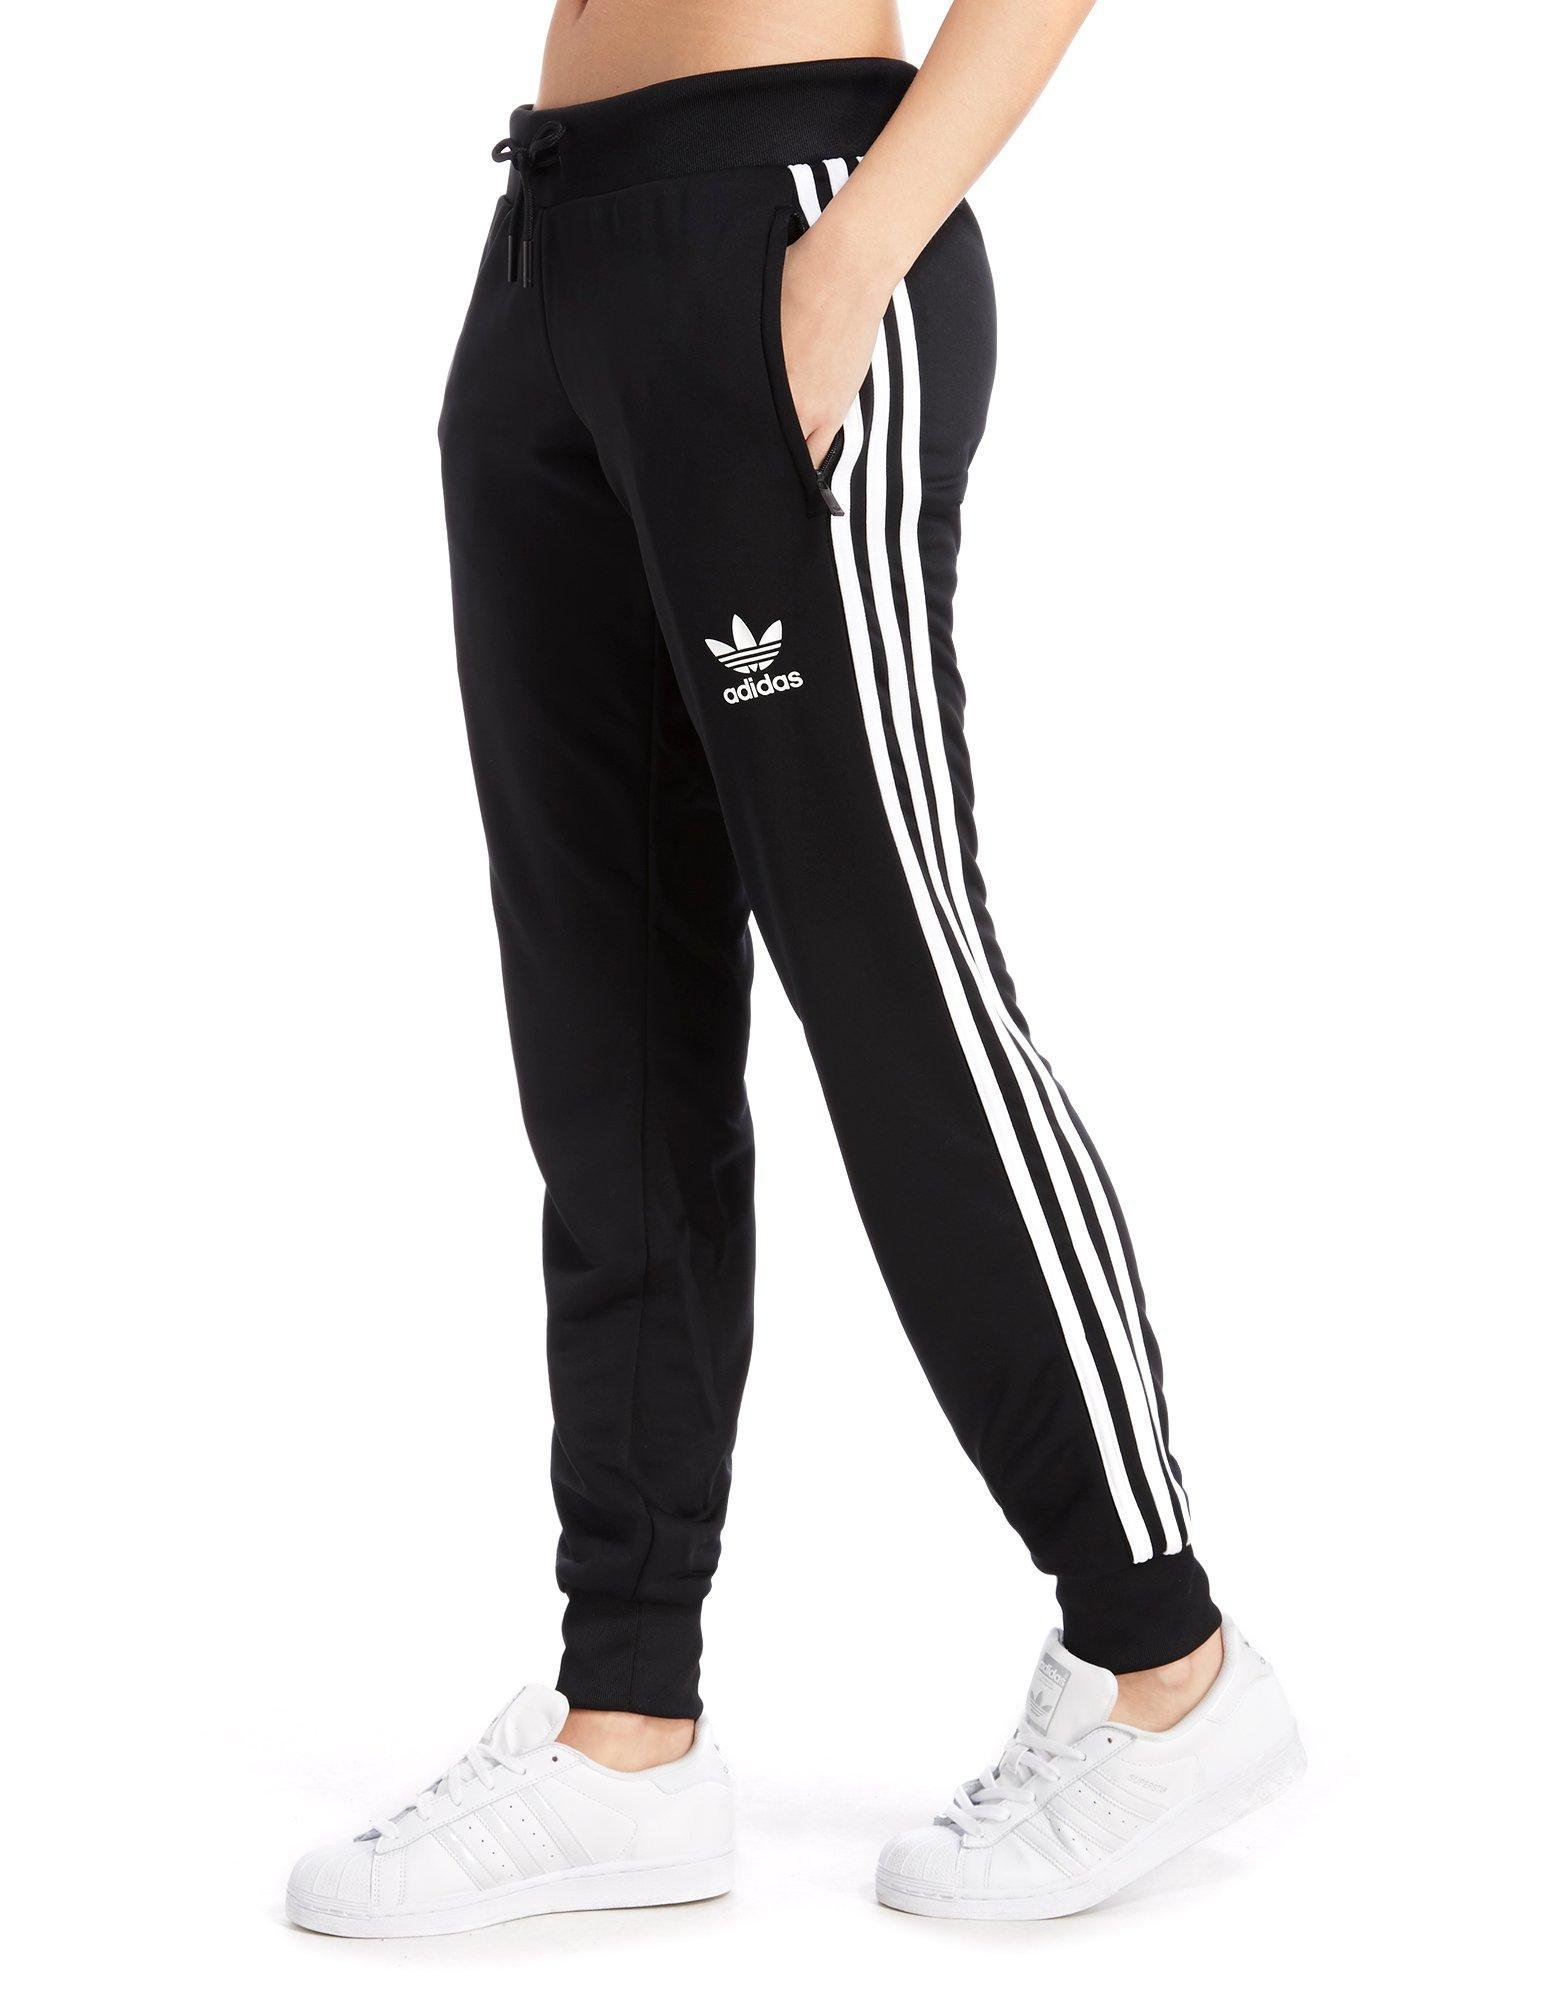 Lyst - Adidas originals Poly 3-stripes Pants in Black